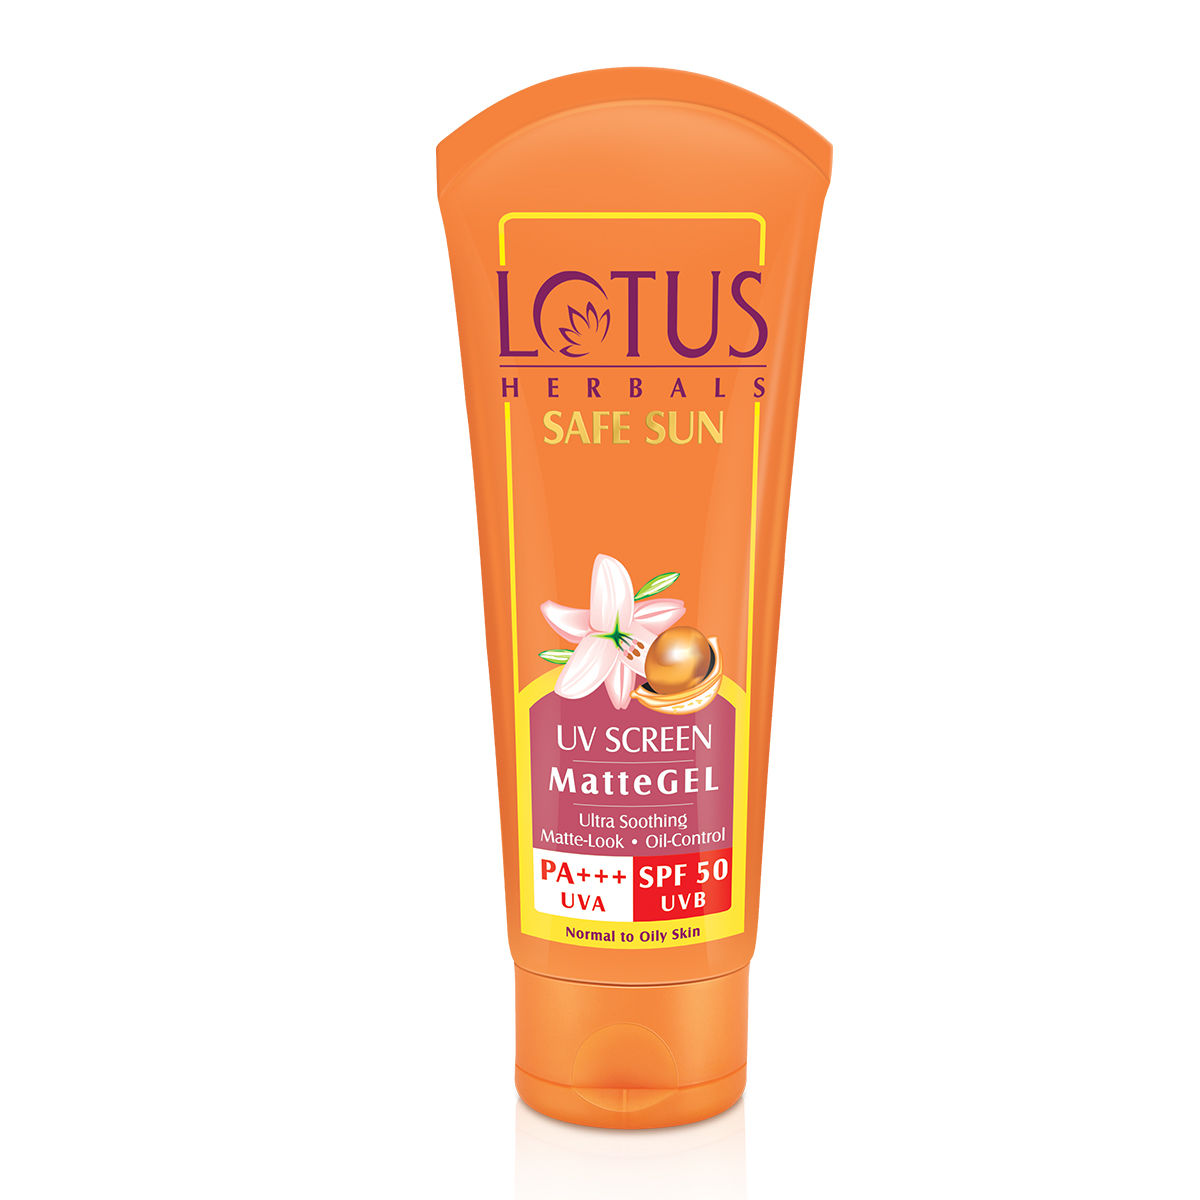 Lotus Herbals Safe Sun UV Screen Matte Gel SPF 50 PA+++ UVA-UVB, 100 gm, Pack of 1 